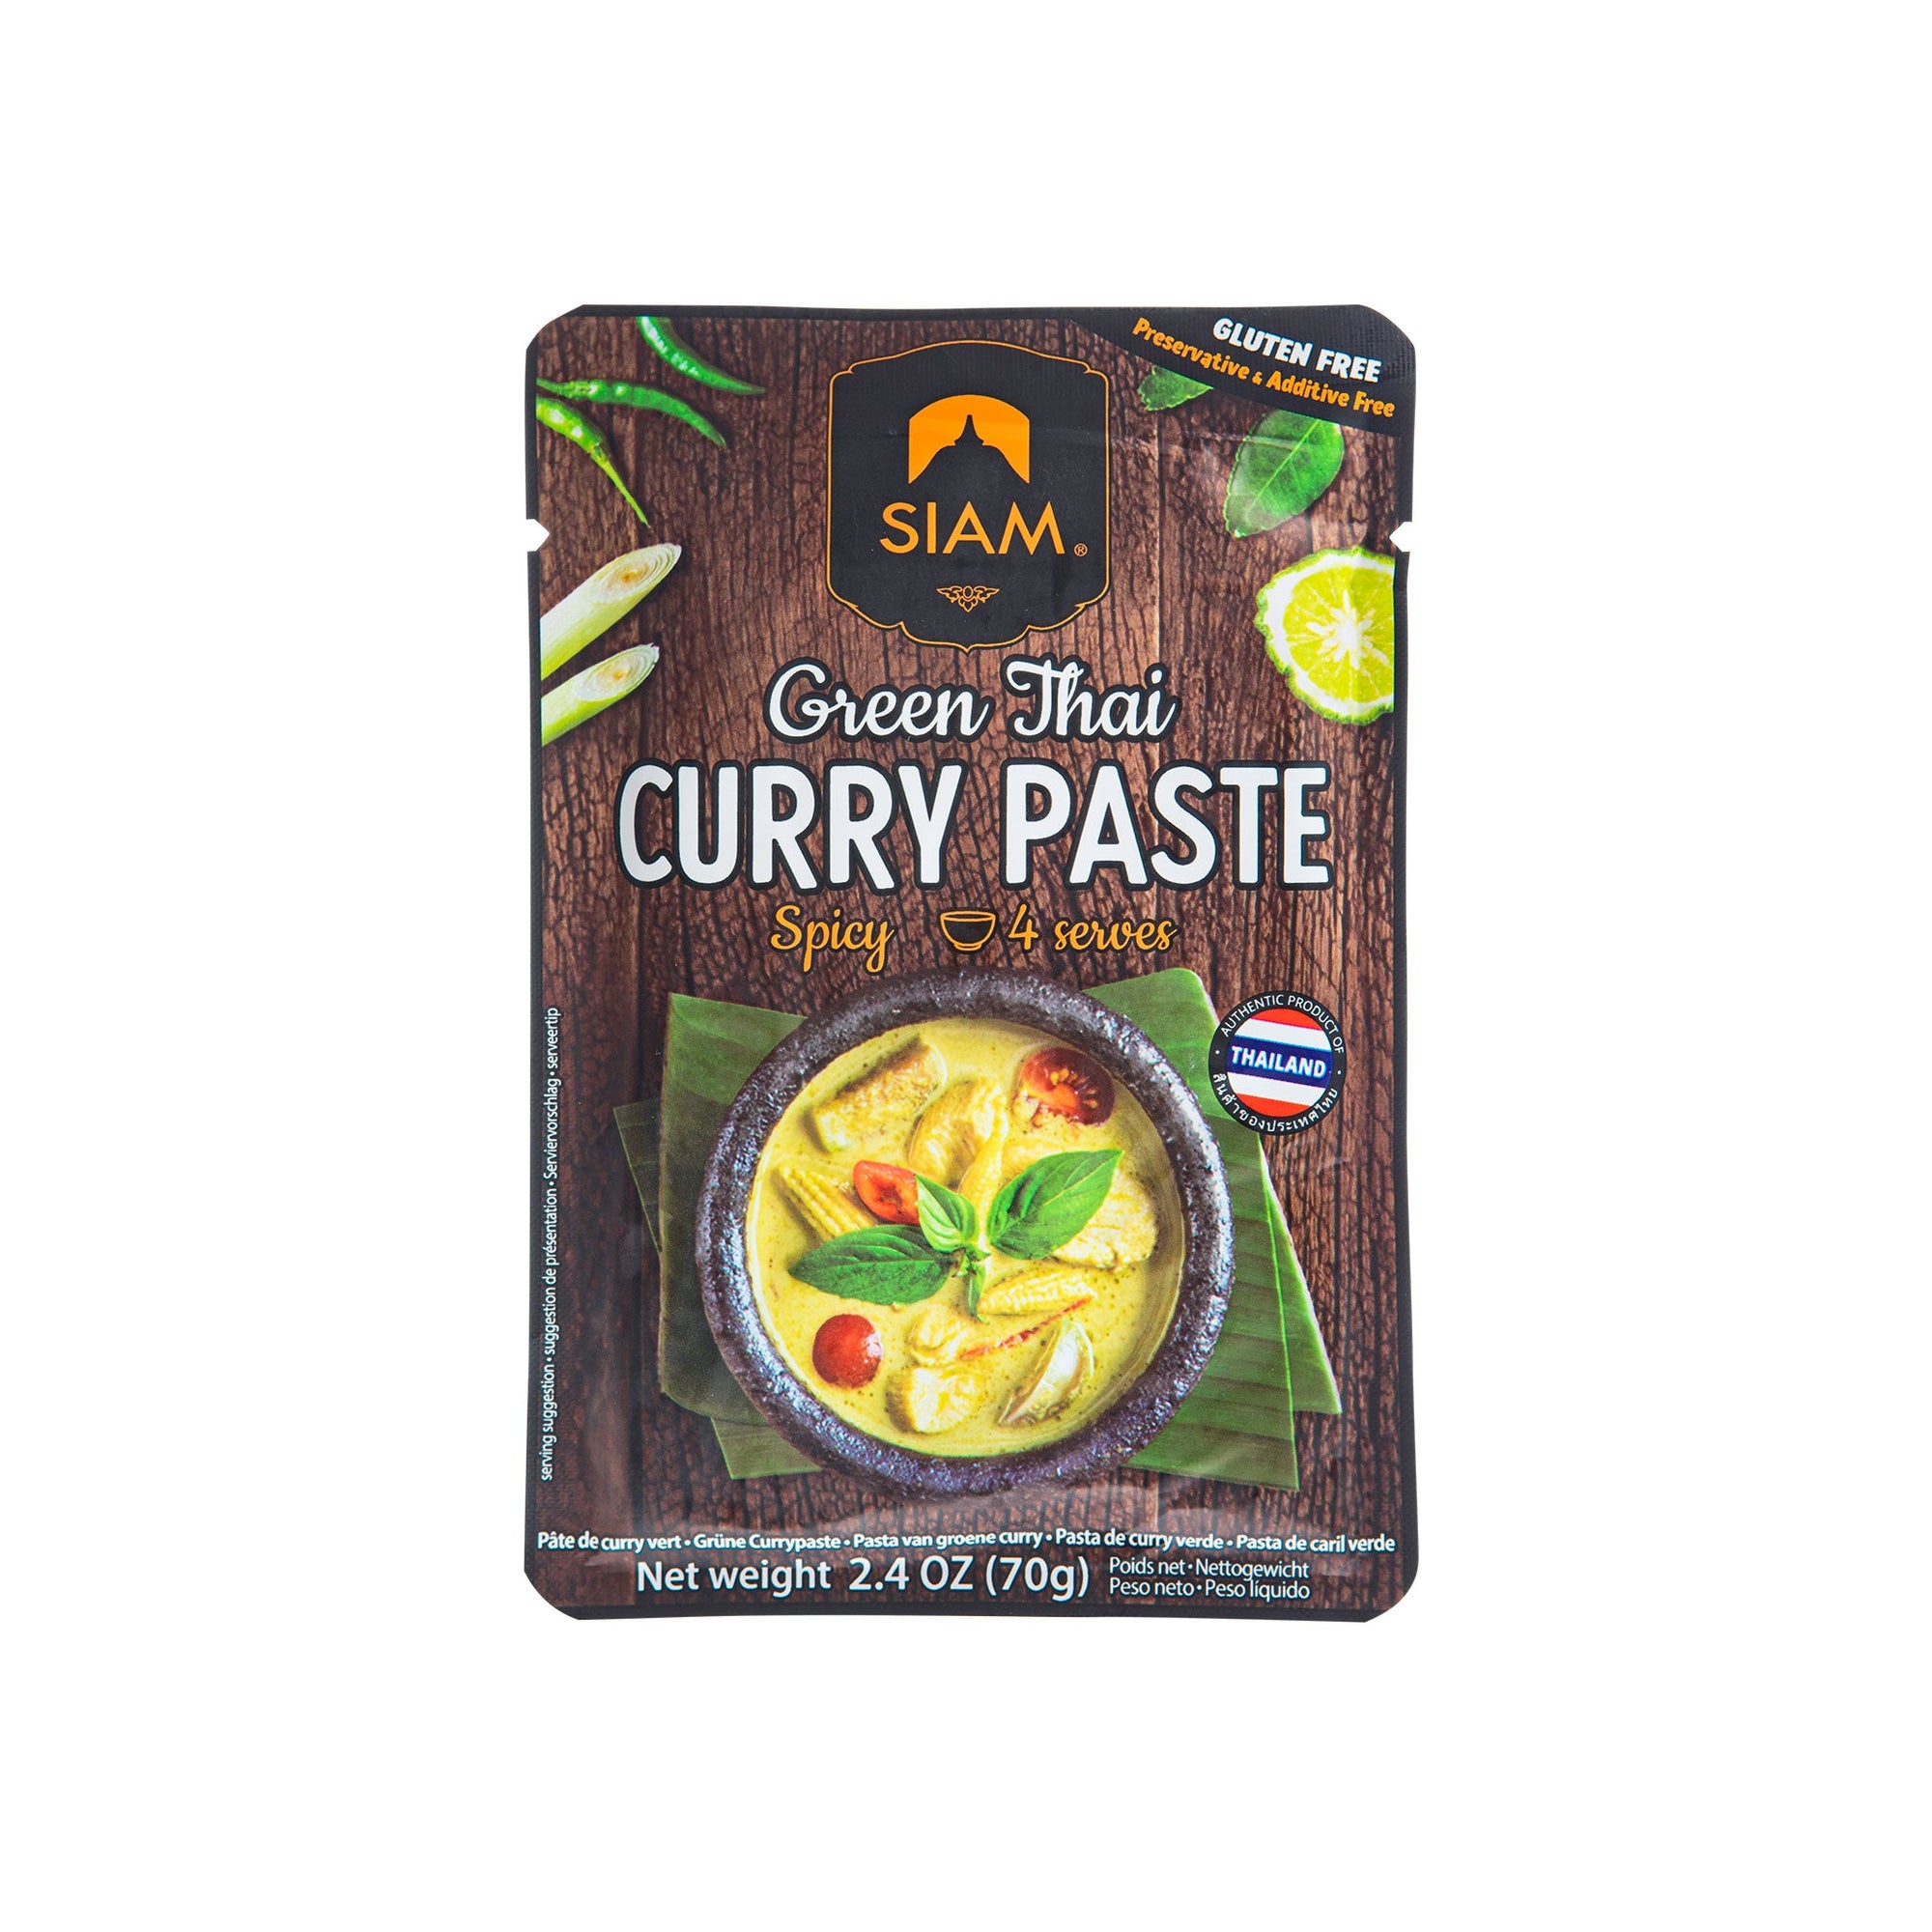 SIAM Green Thai Curry Paste, 2.4 oz (70g)